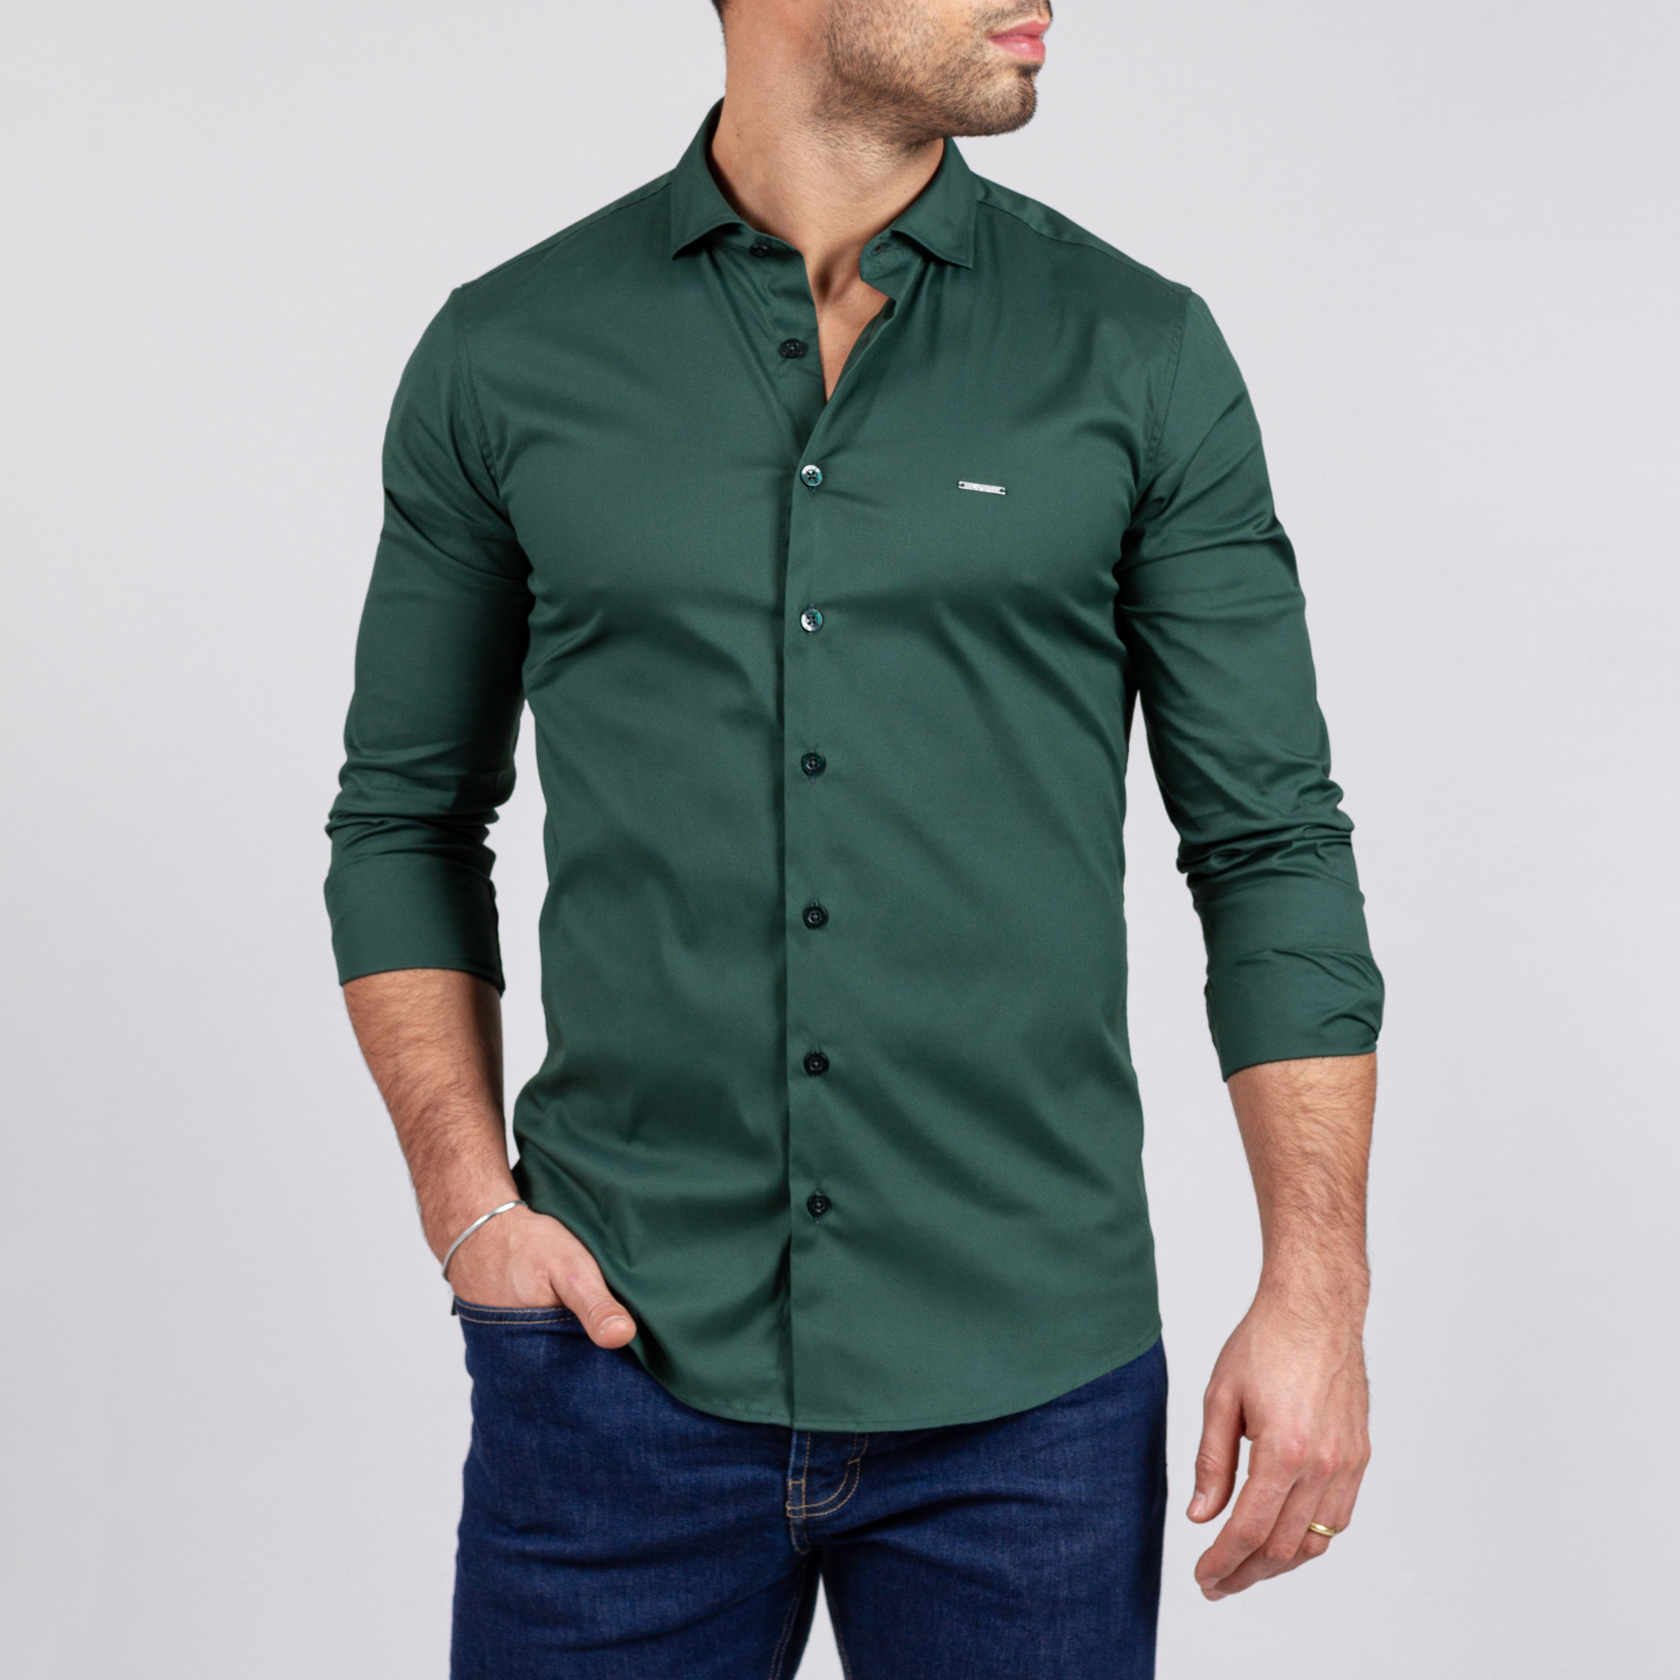 Camisa Zolf Gola Italiana Verde Royal Slim Fit - Man Inc Fashion Store %